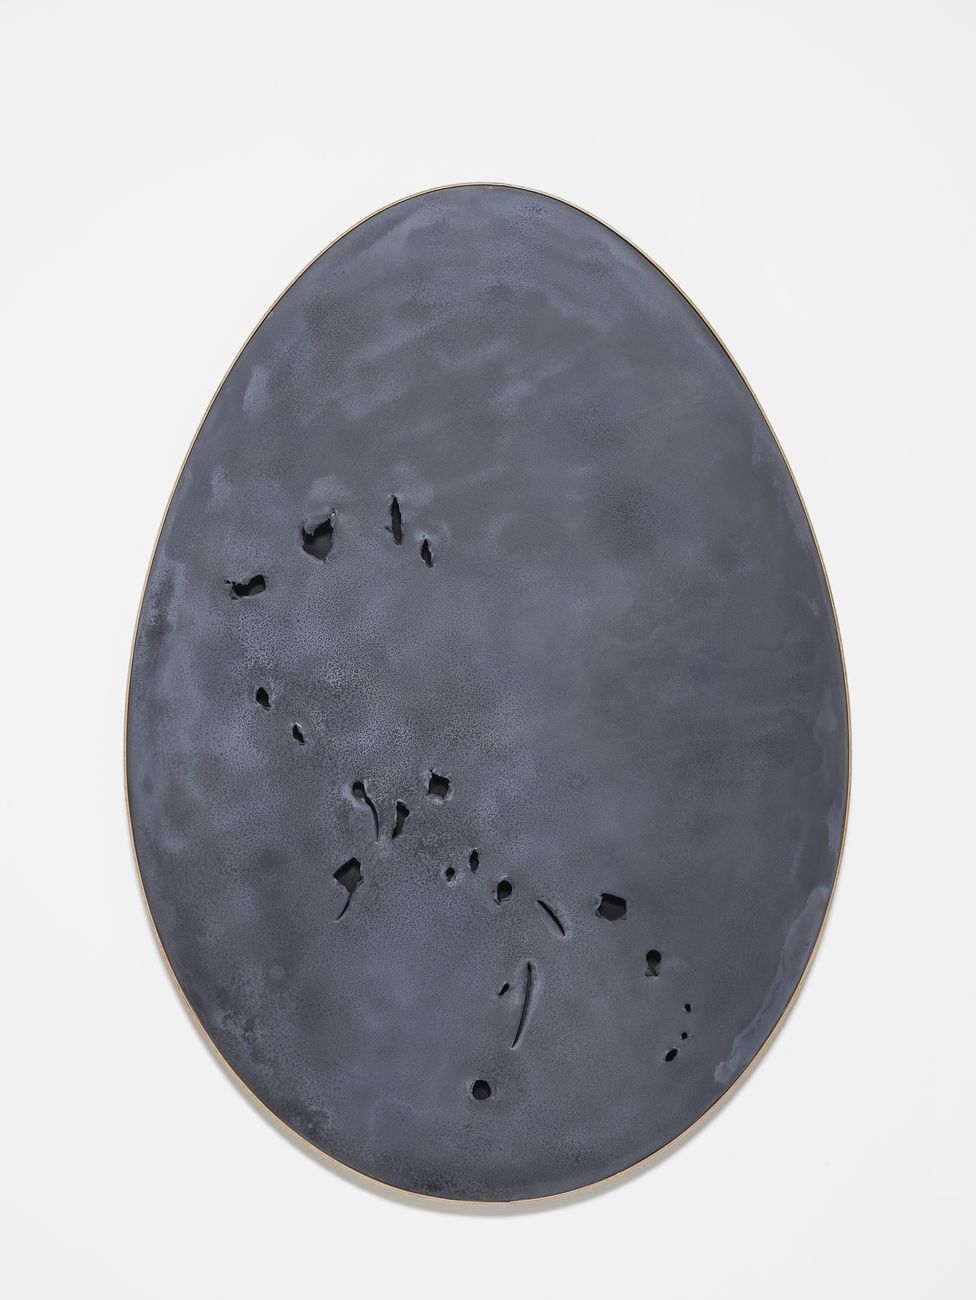 Gavin Turk, Holy Egg (Tarnished Aluminium Medium), 2017. Photo Andy Keate